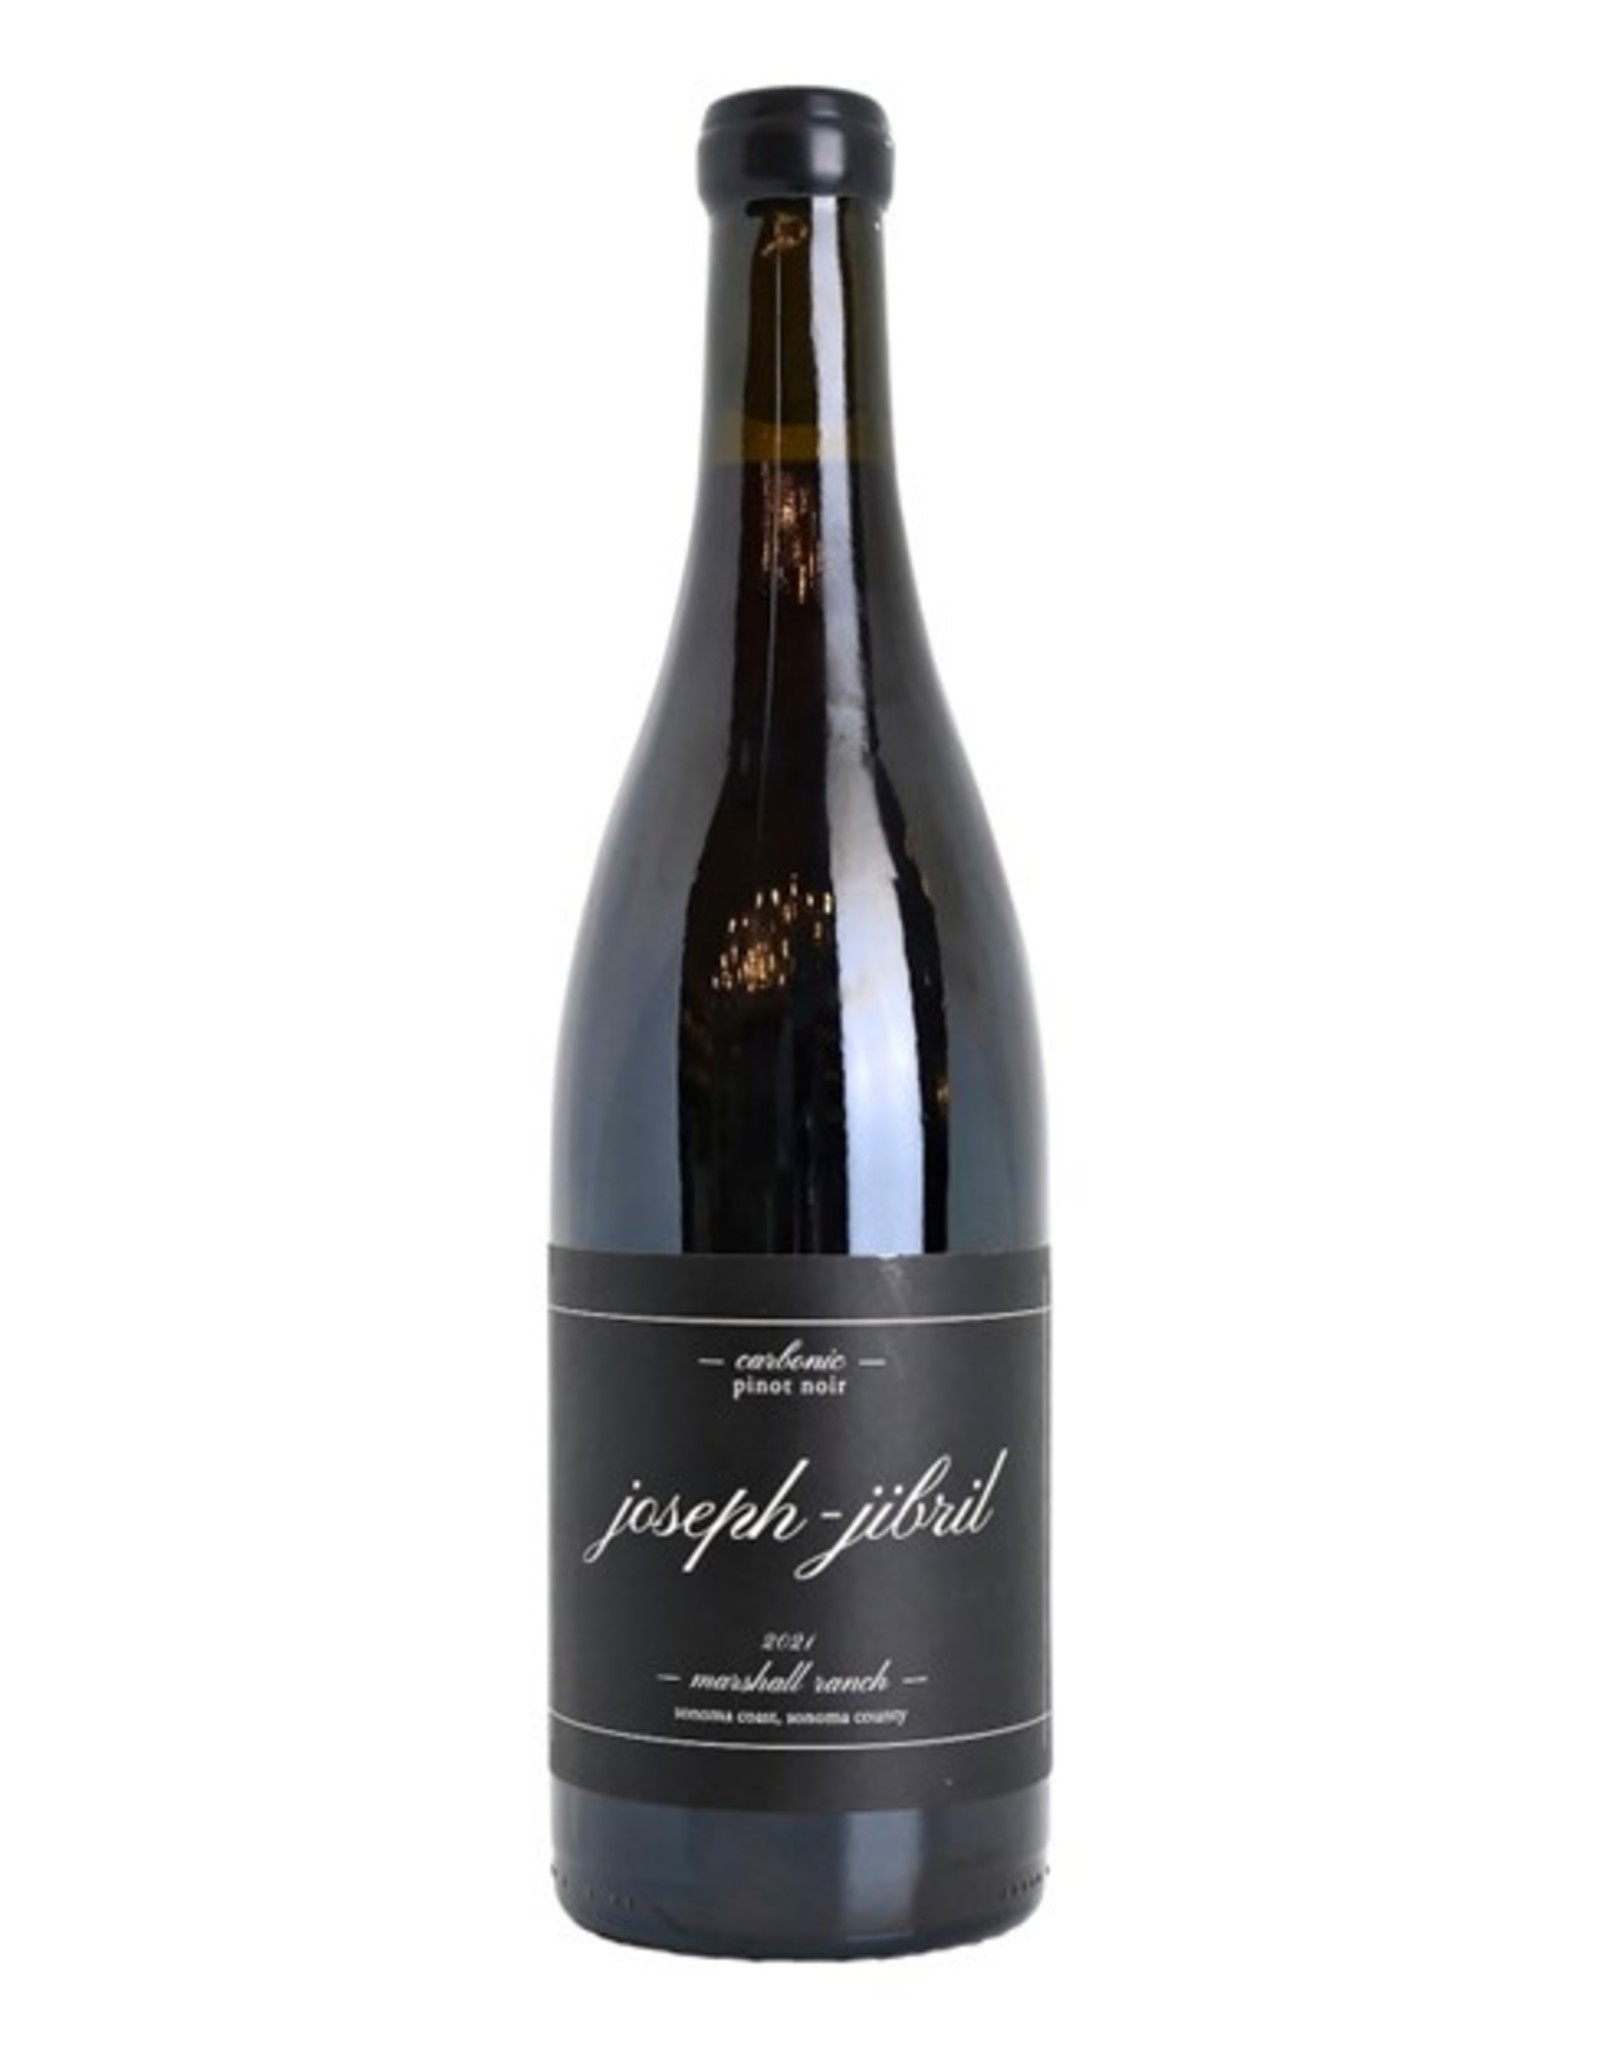 Joseph-Jibril Carbonic Pinot Noir Marshall Ranch Sonoma Coast